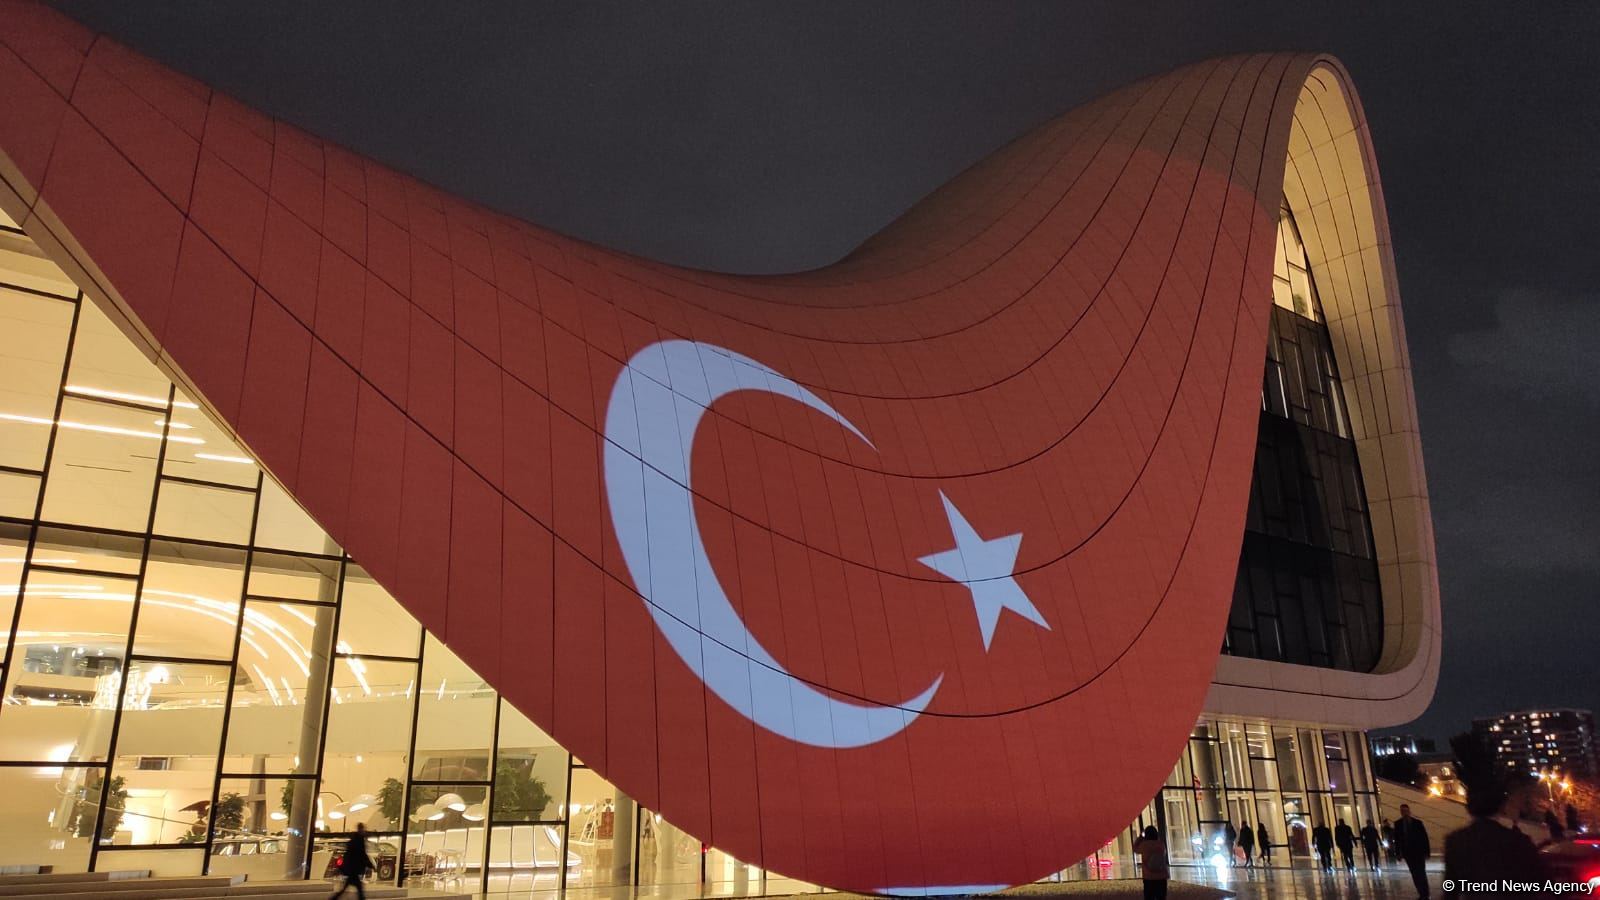 Building of Baku's Heydar Aliyev Center painted in colors of Turkish flag